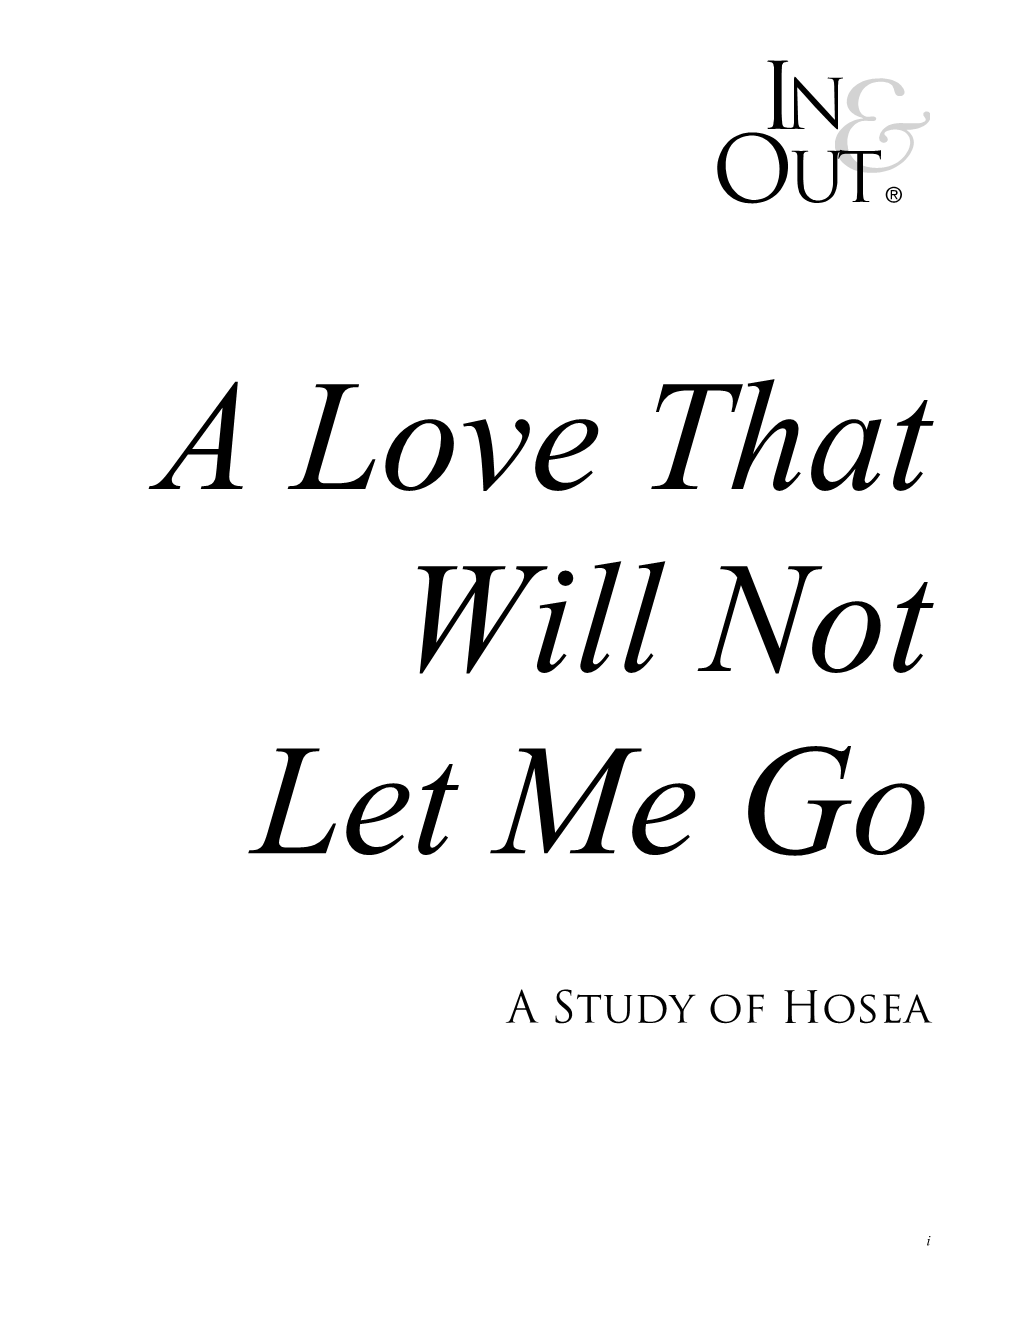 A Study of Hosea